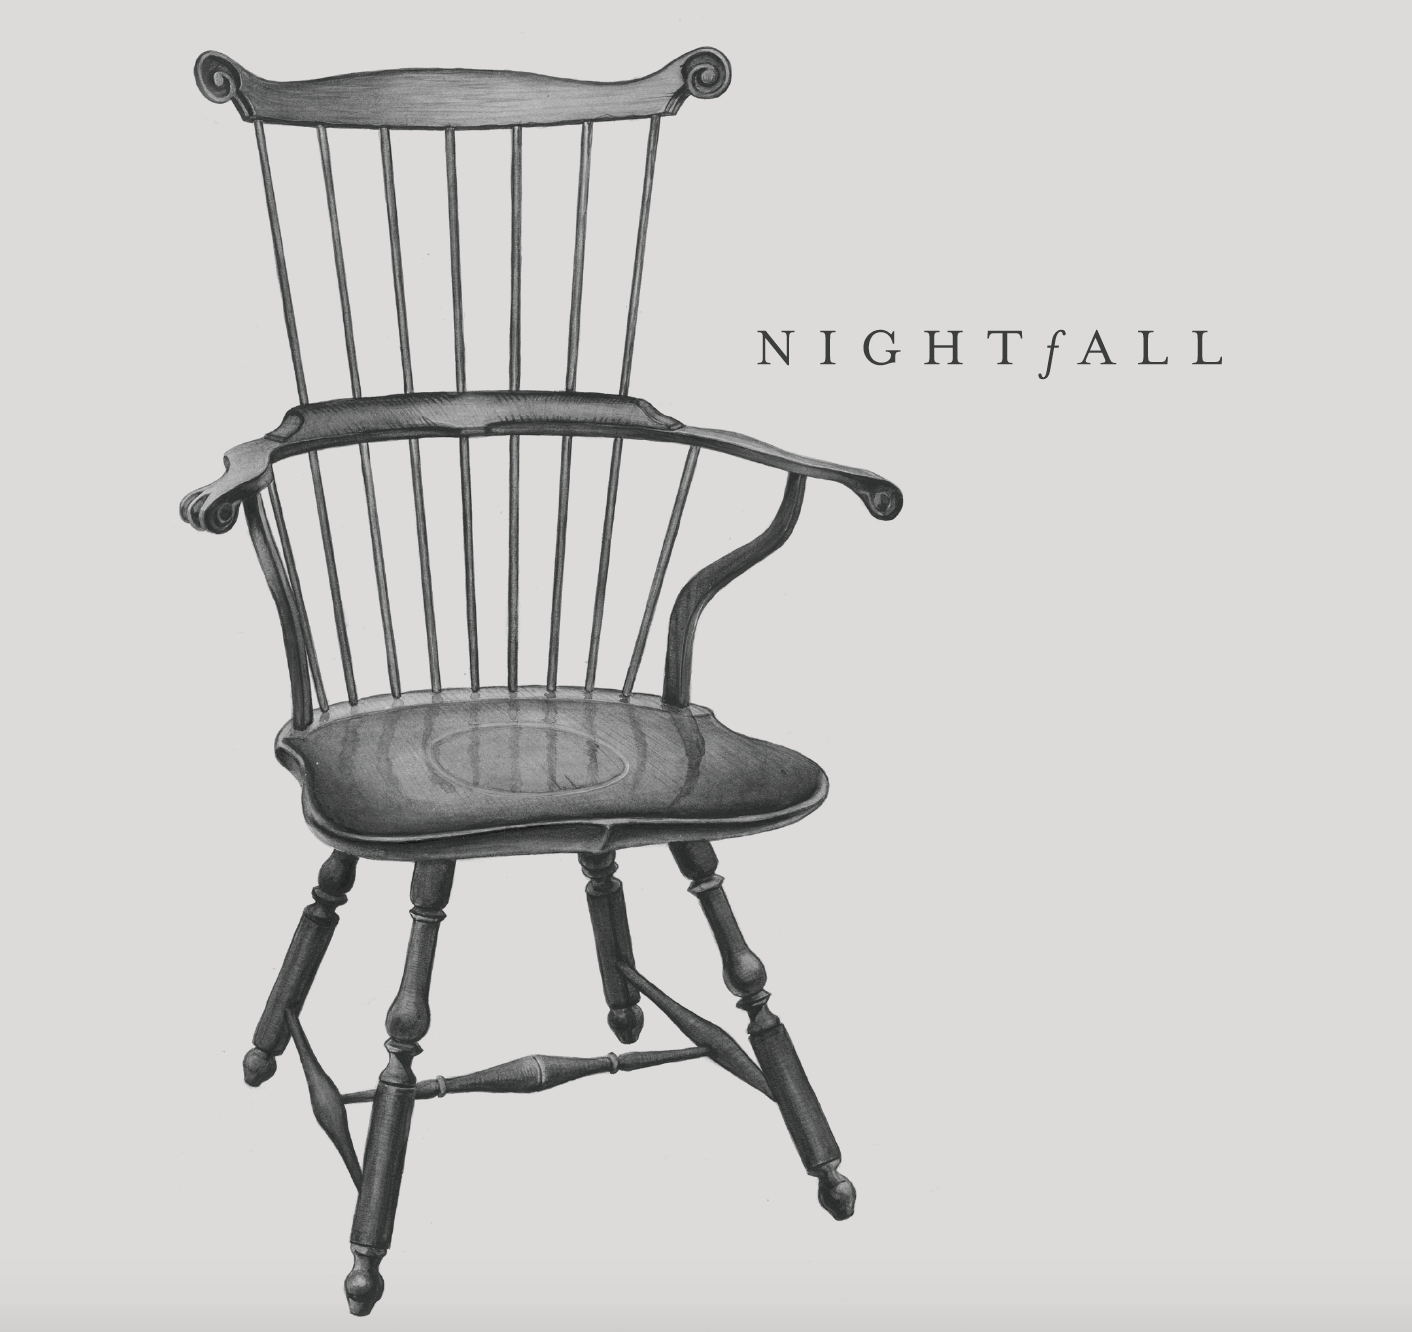 Nightfall (Part 1)